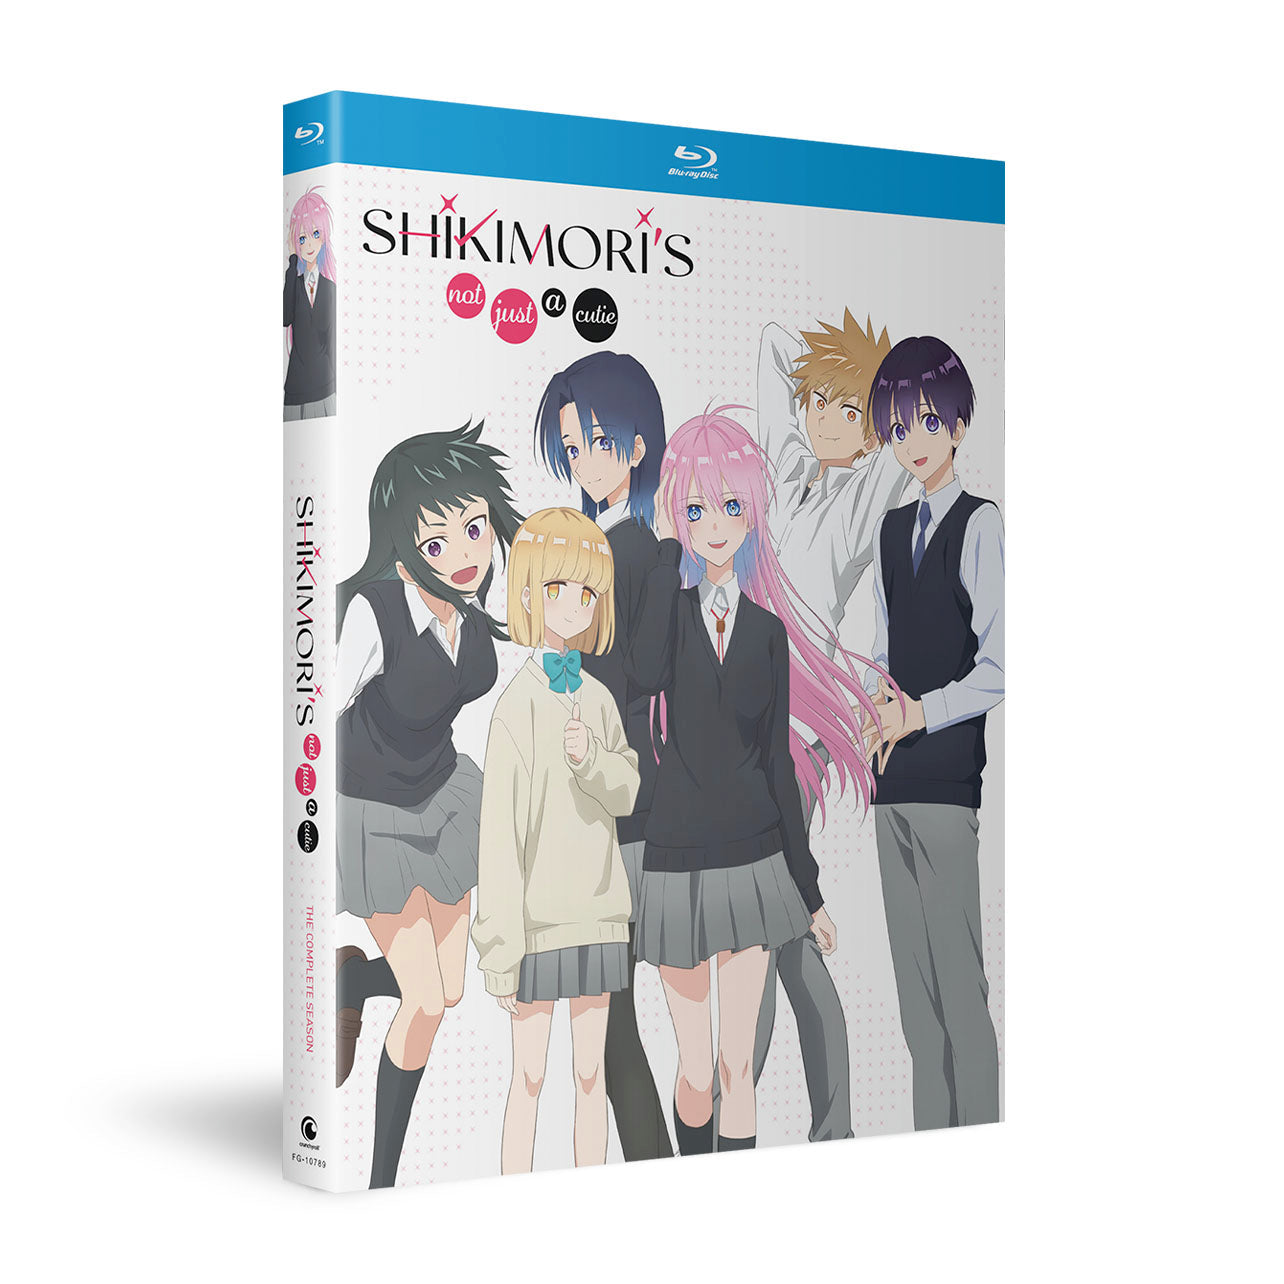 Shikimori's Not Just a Cutie - The Complete Season - Blu-Ray image count 3